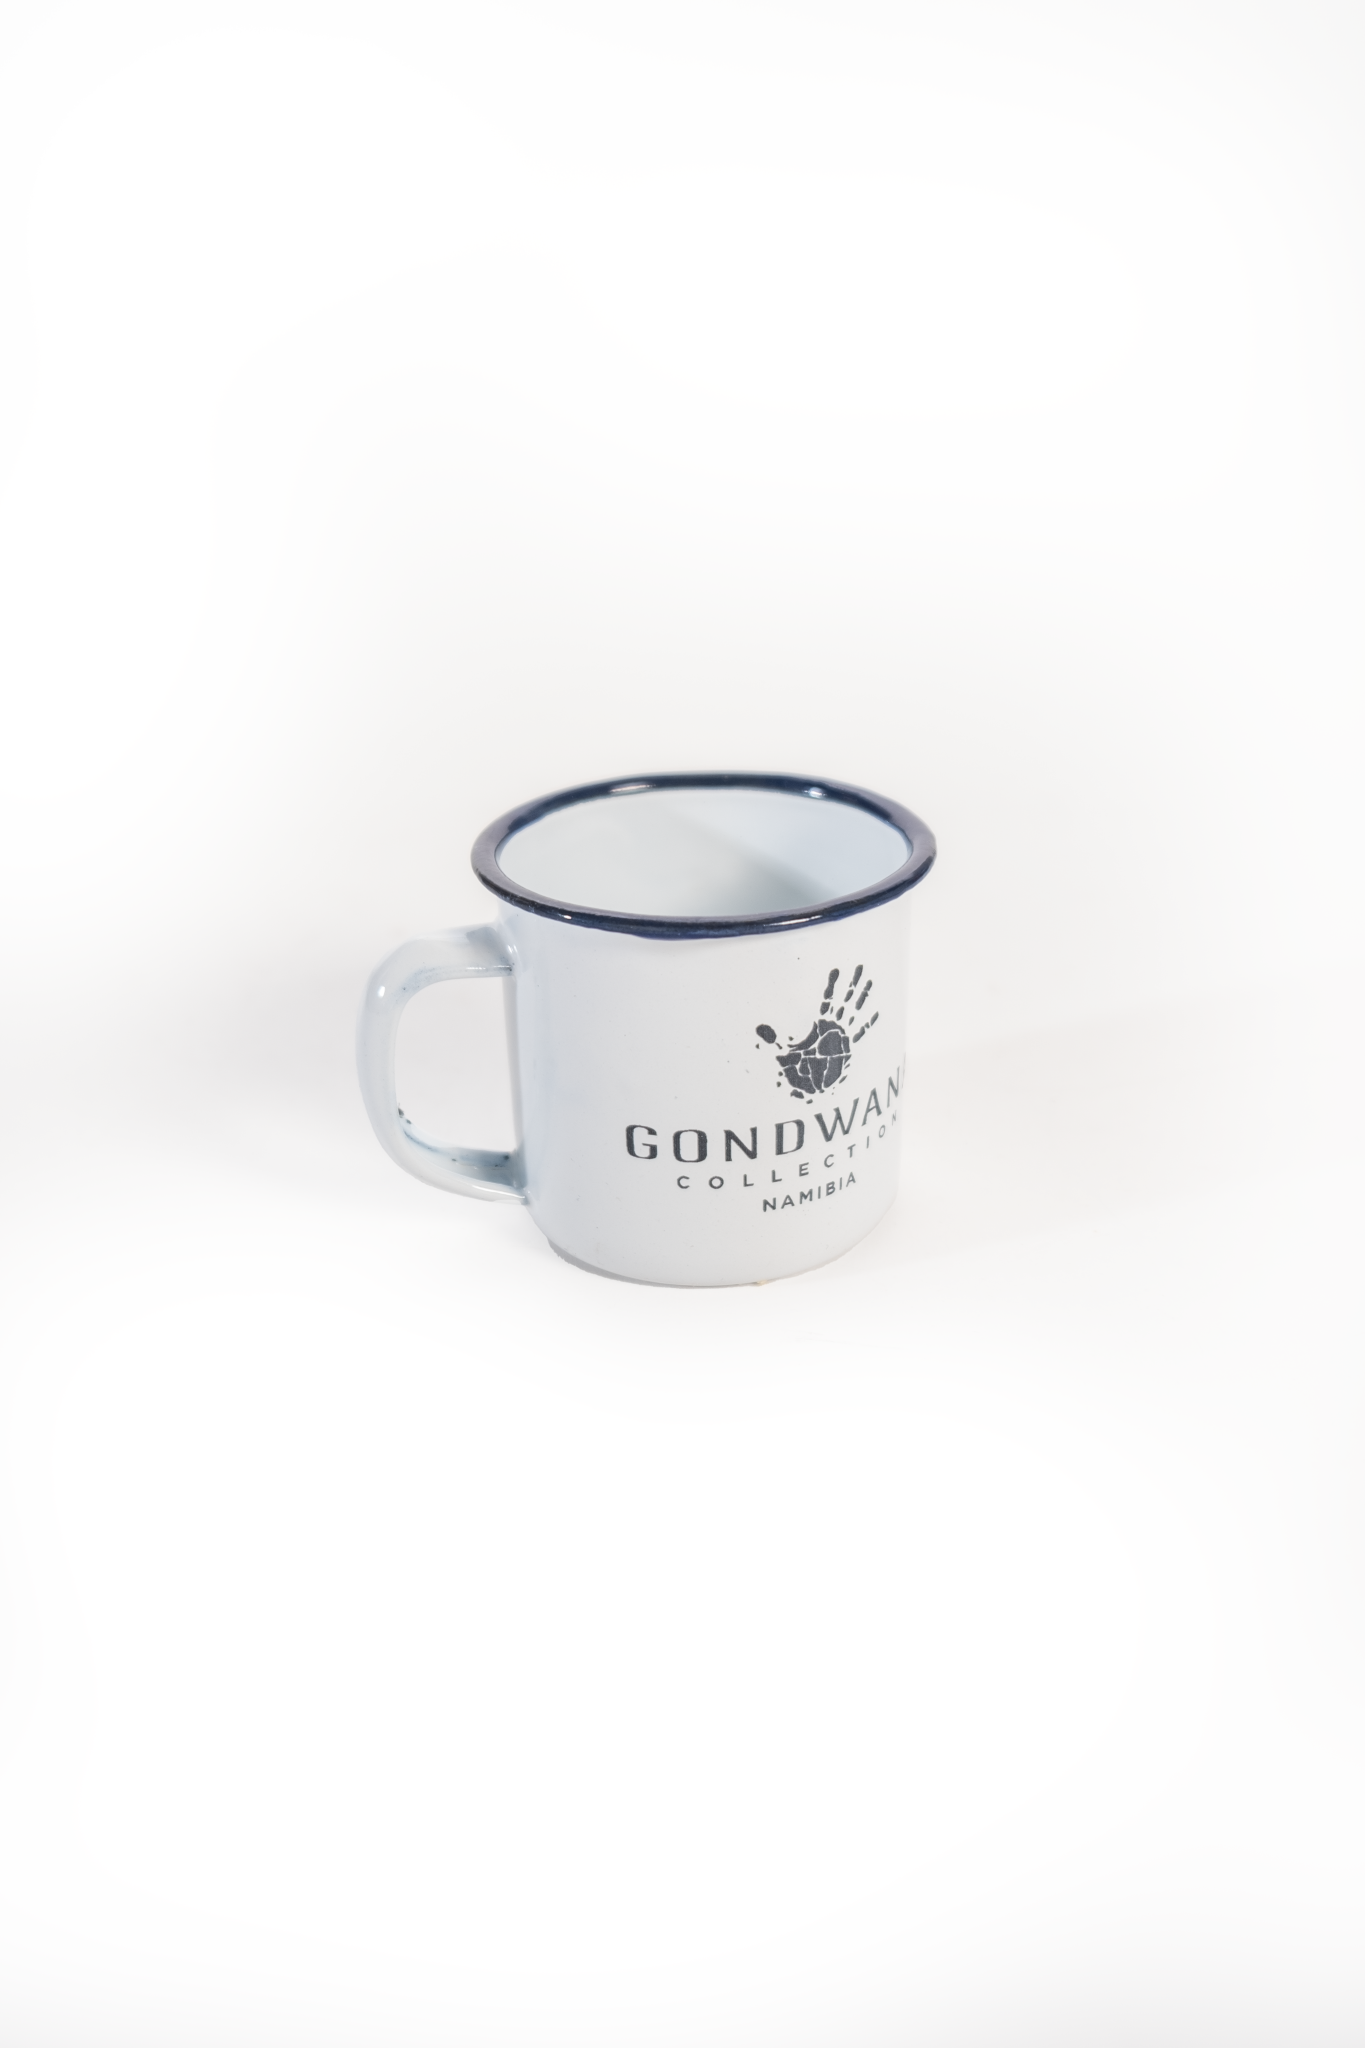 Gondwana logo enamel Mug 100ml